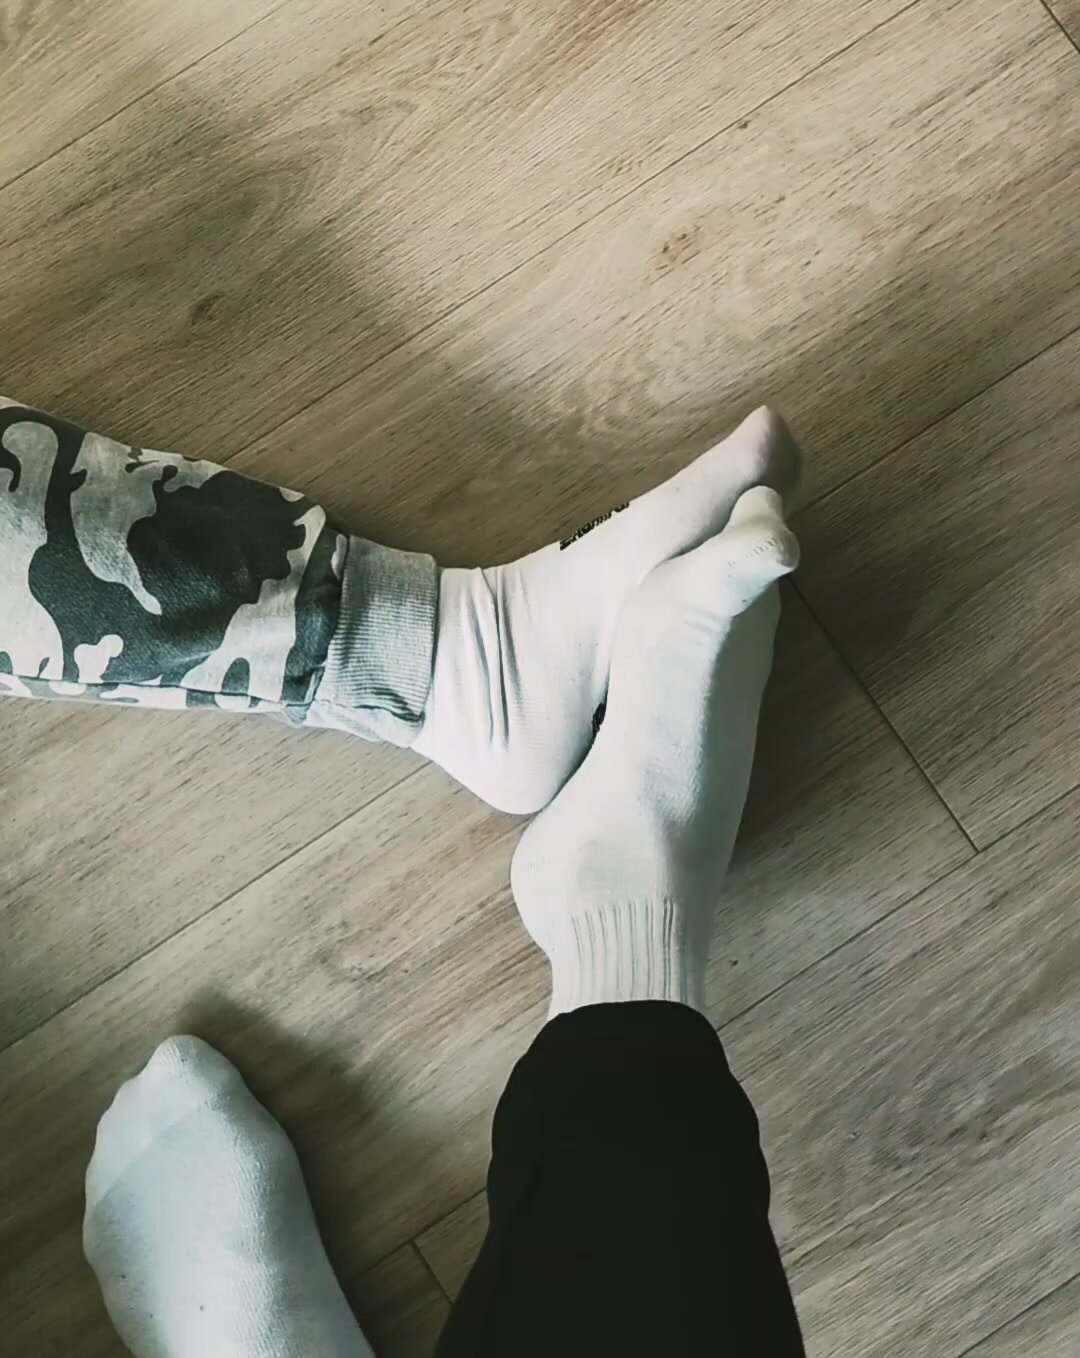 Socks, footsie, foot play